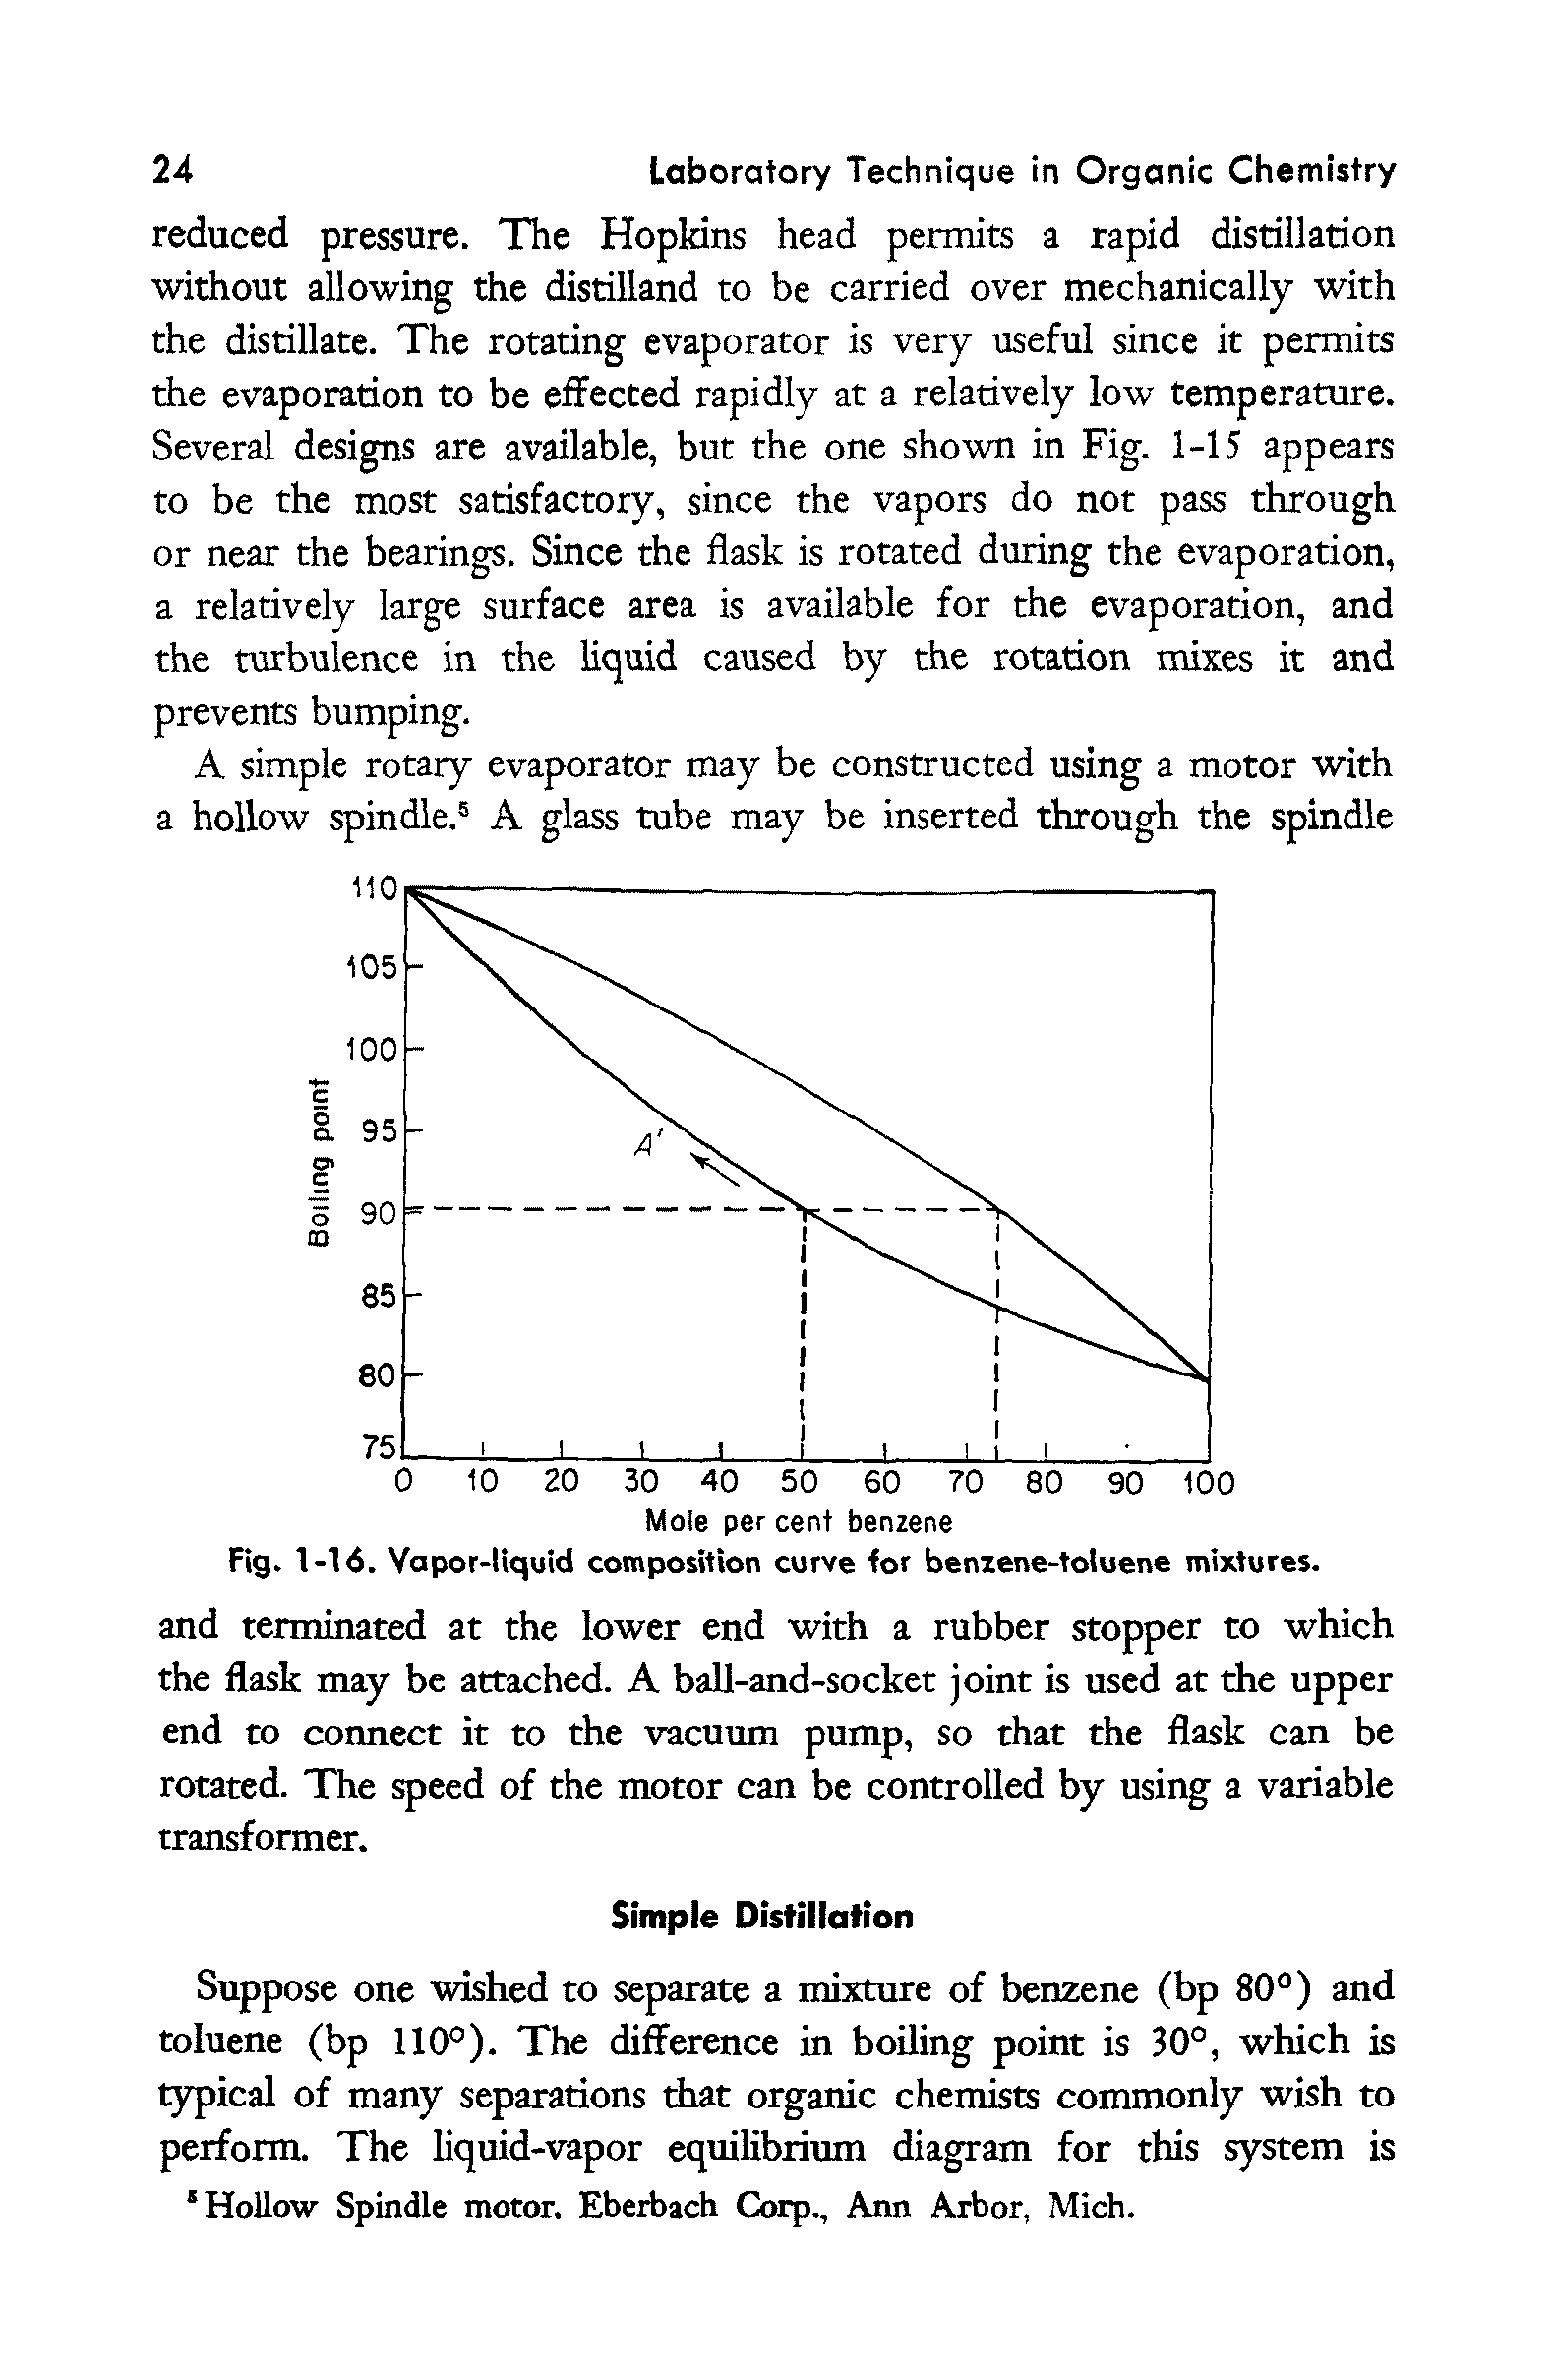 Fig. 1-16. Vapor-liquid composition curve lor benzene-toluene mixtures.